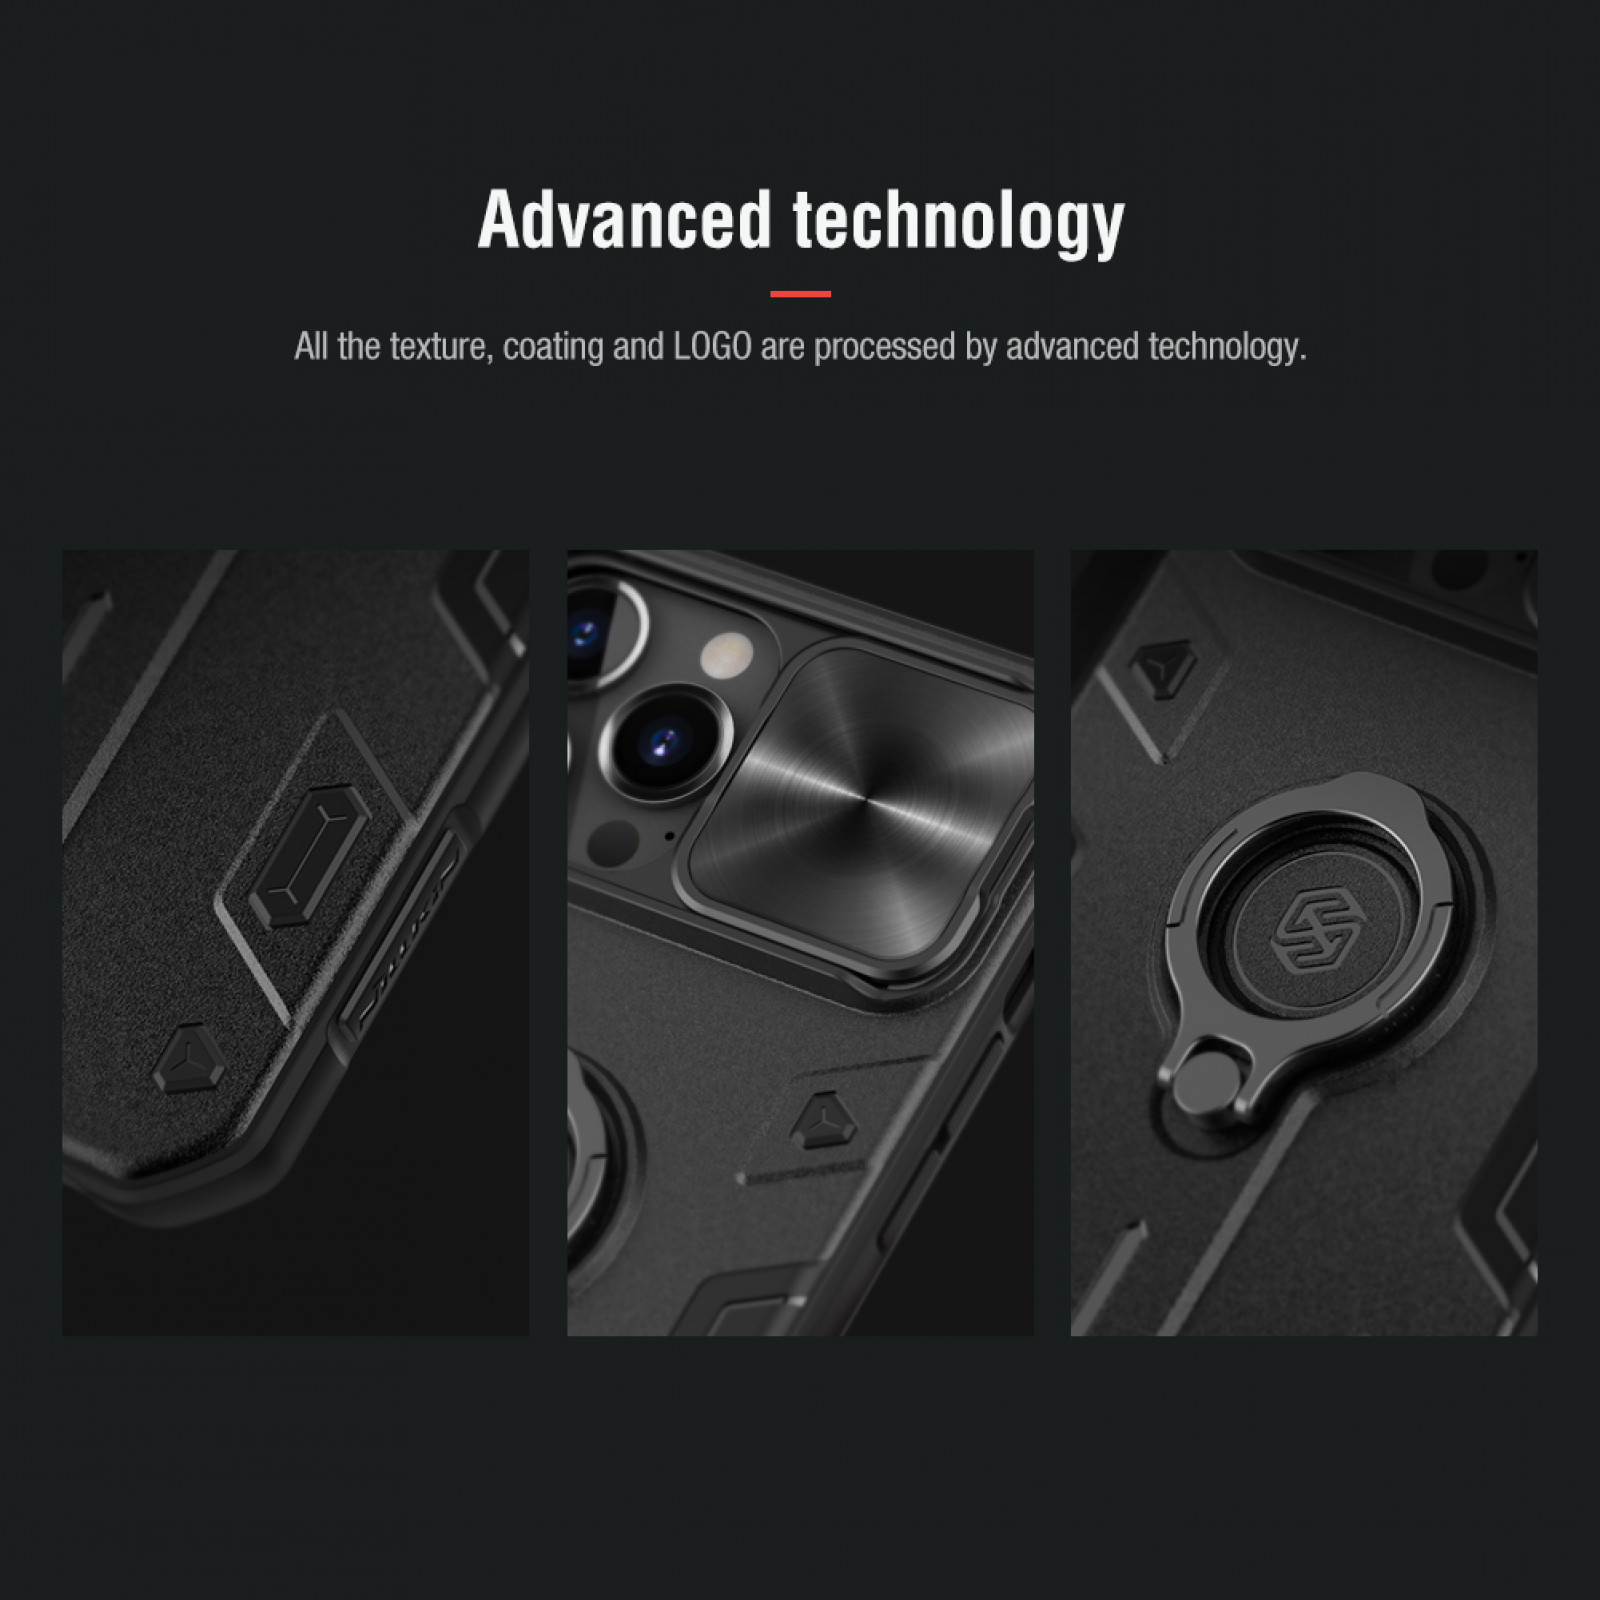 Гръб Nillkin cam shield armor за Iphone 13 Pro Max - Черен